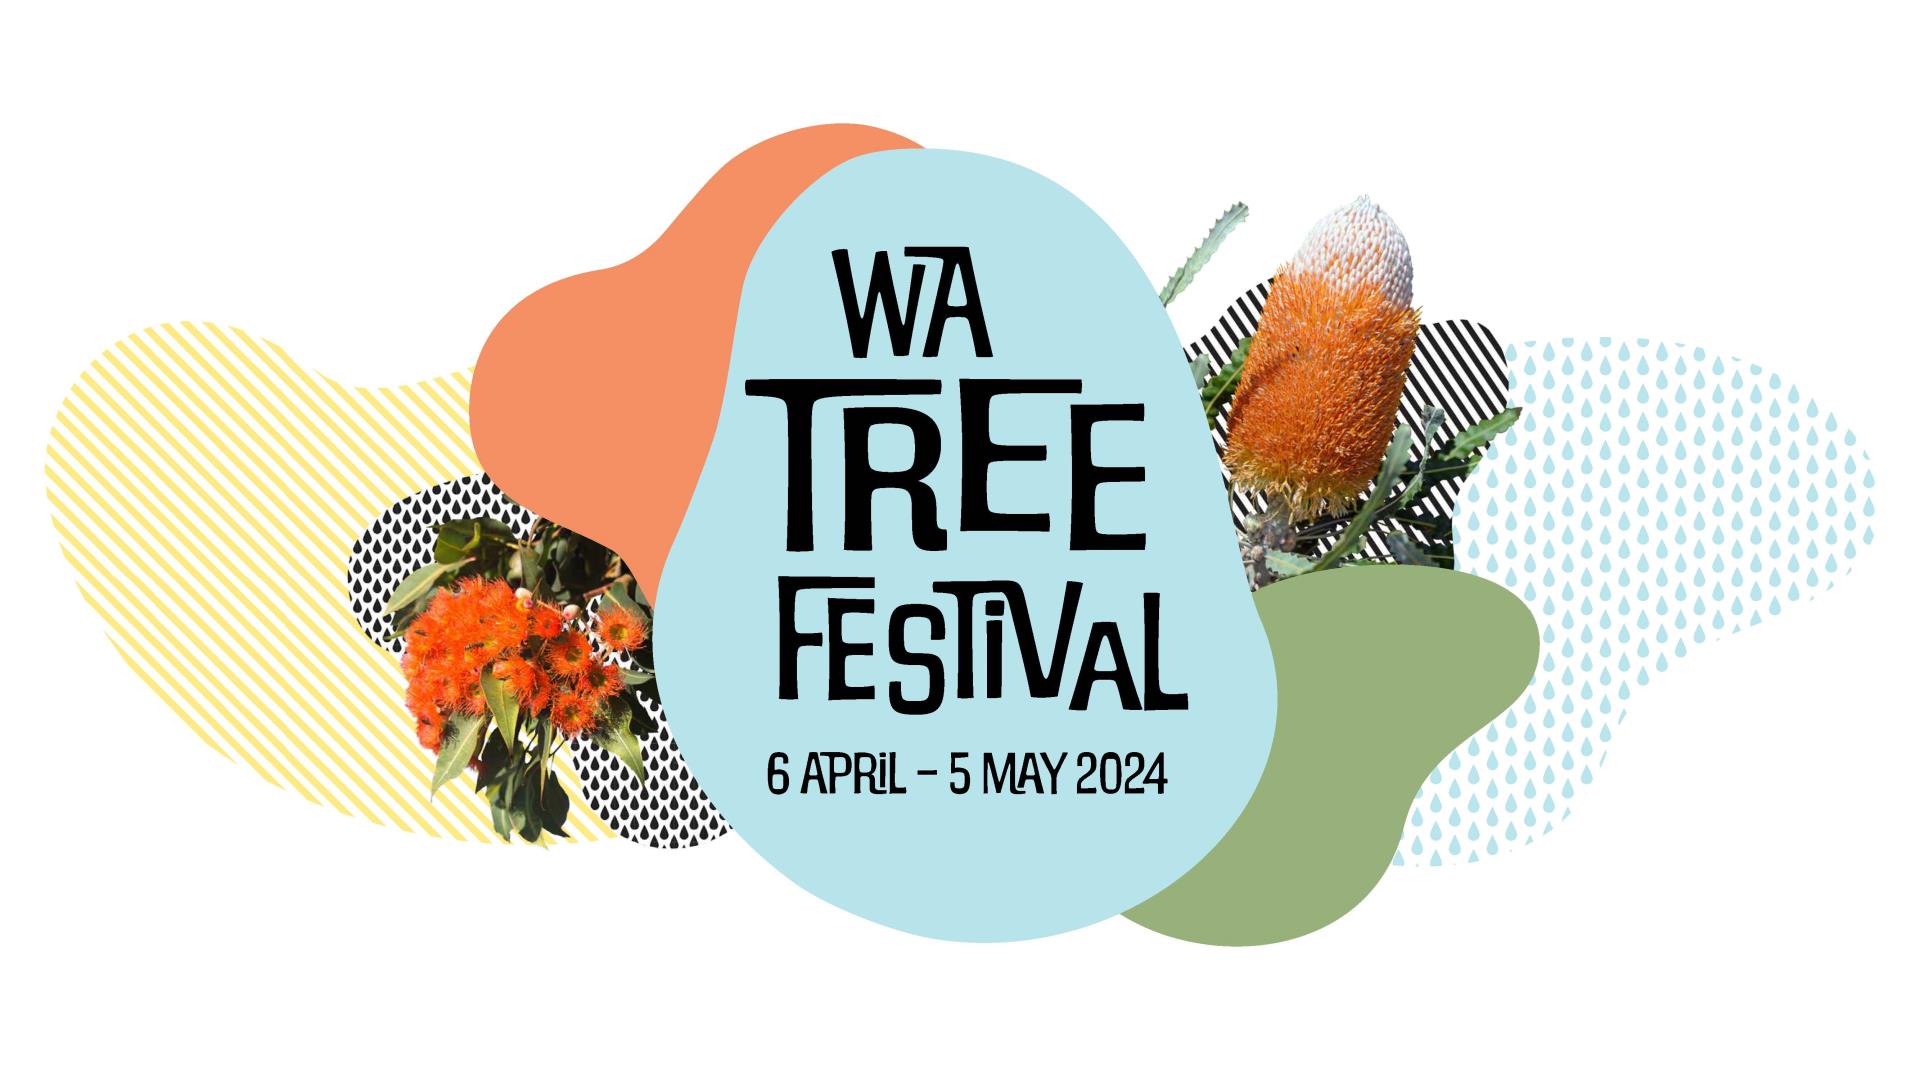 WA Tree Festival 2024